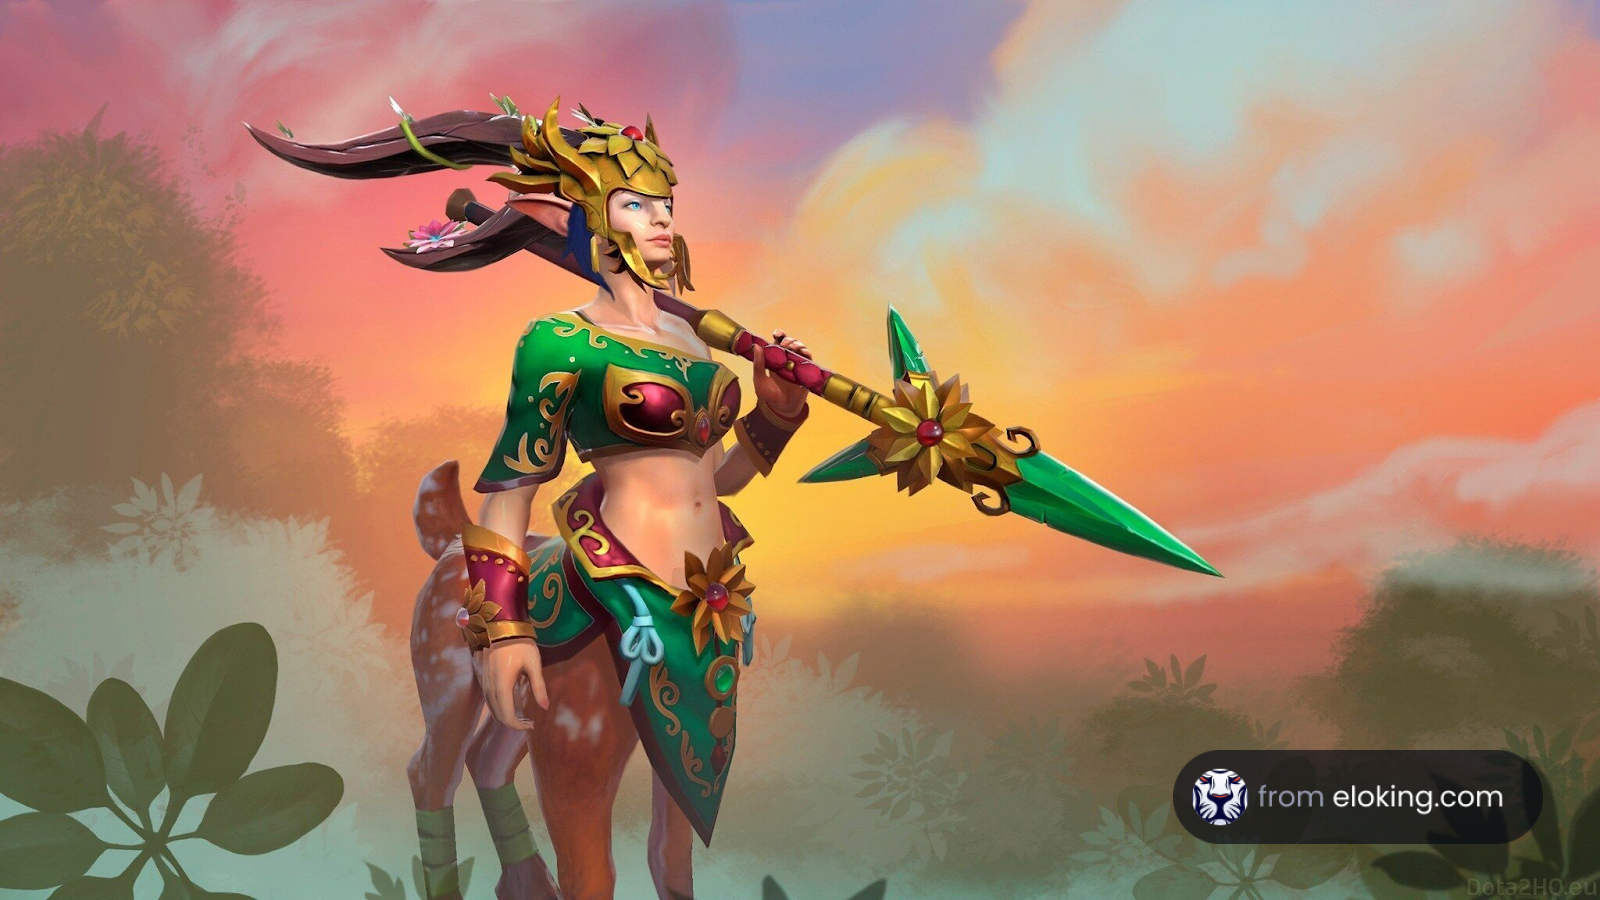 Fantasy warrior woman wielding a spear and wearing an ornate helmet